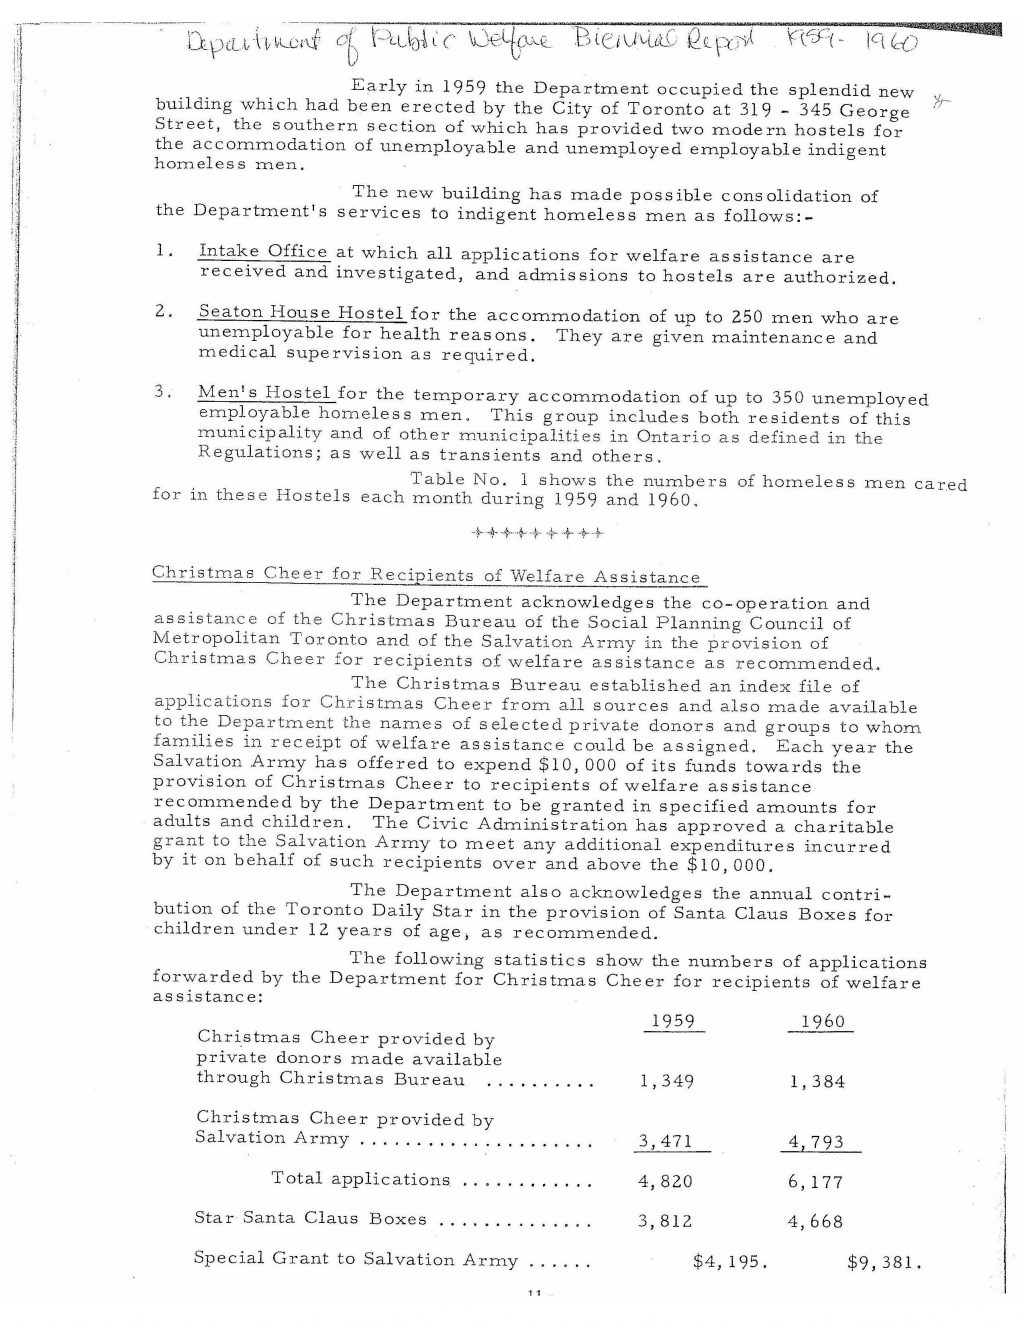 City of Toronto Department of Public Welfare, Biennial Report, 1959-1960.